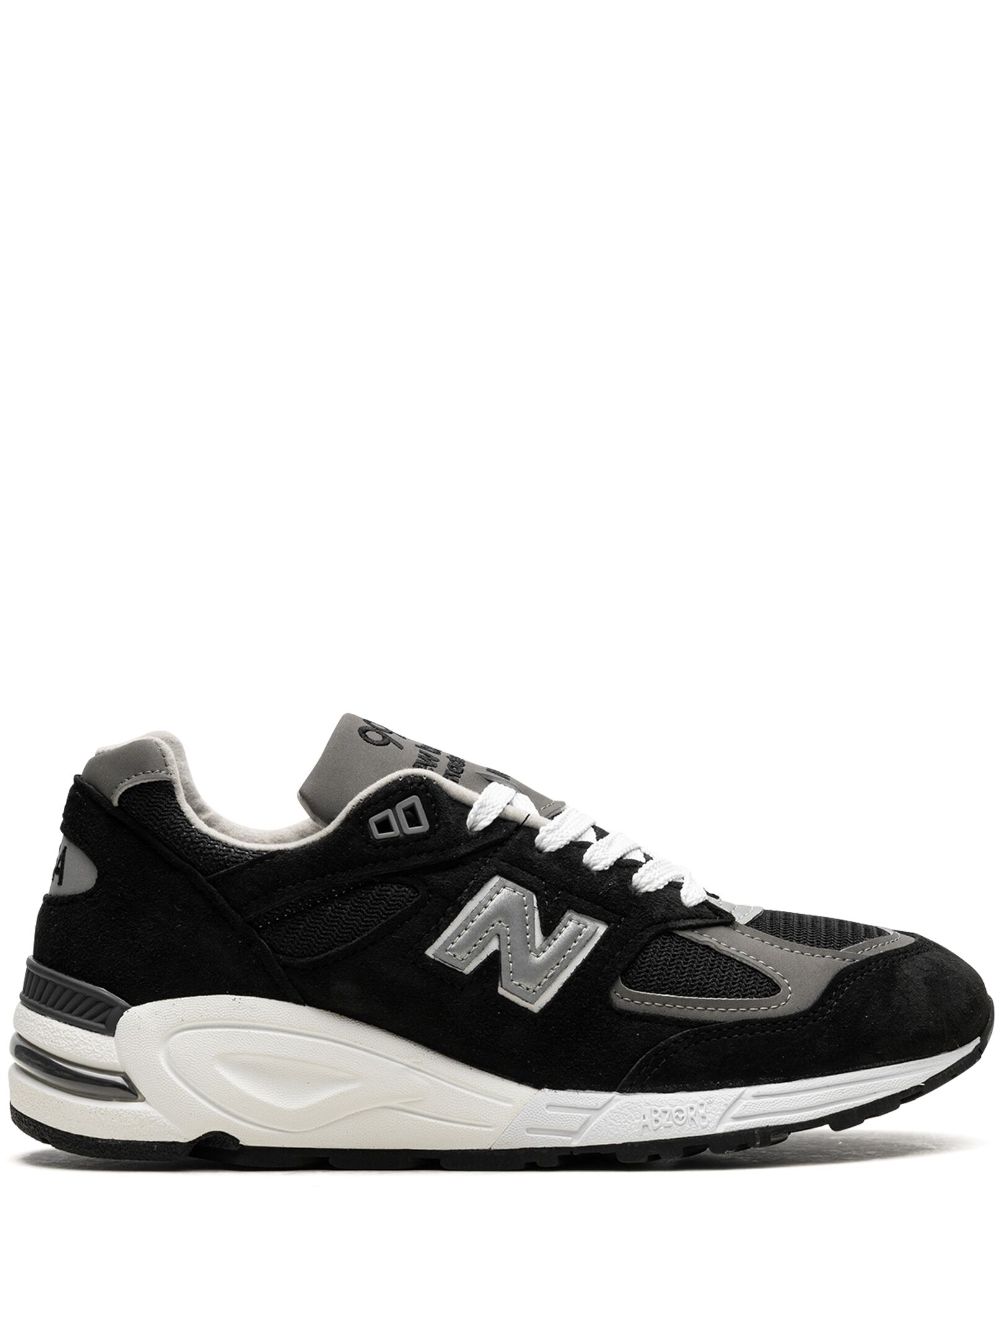 New Balance 990 "Black/White" sneakers von New Balance